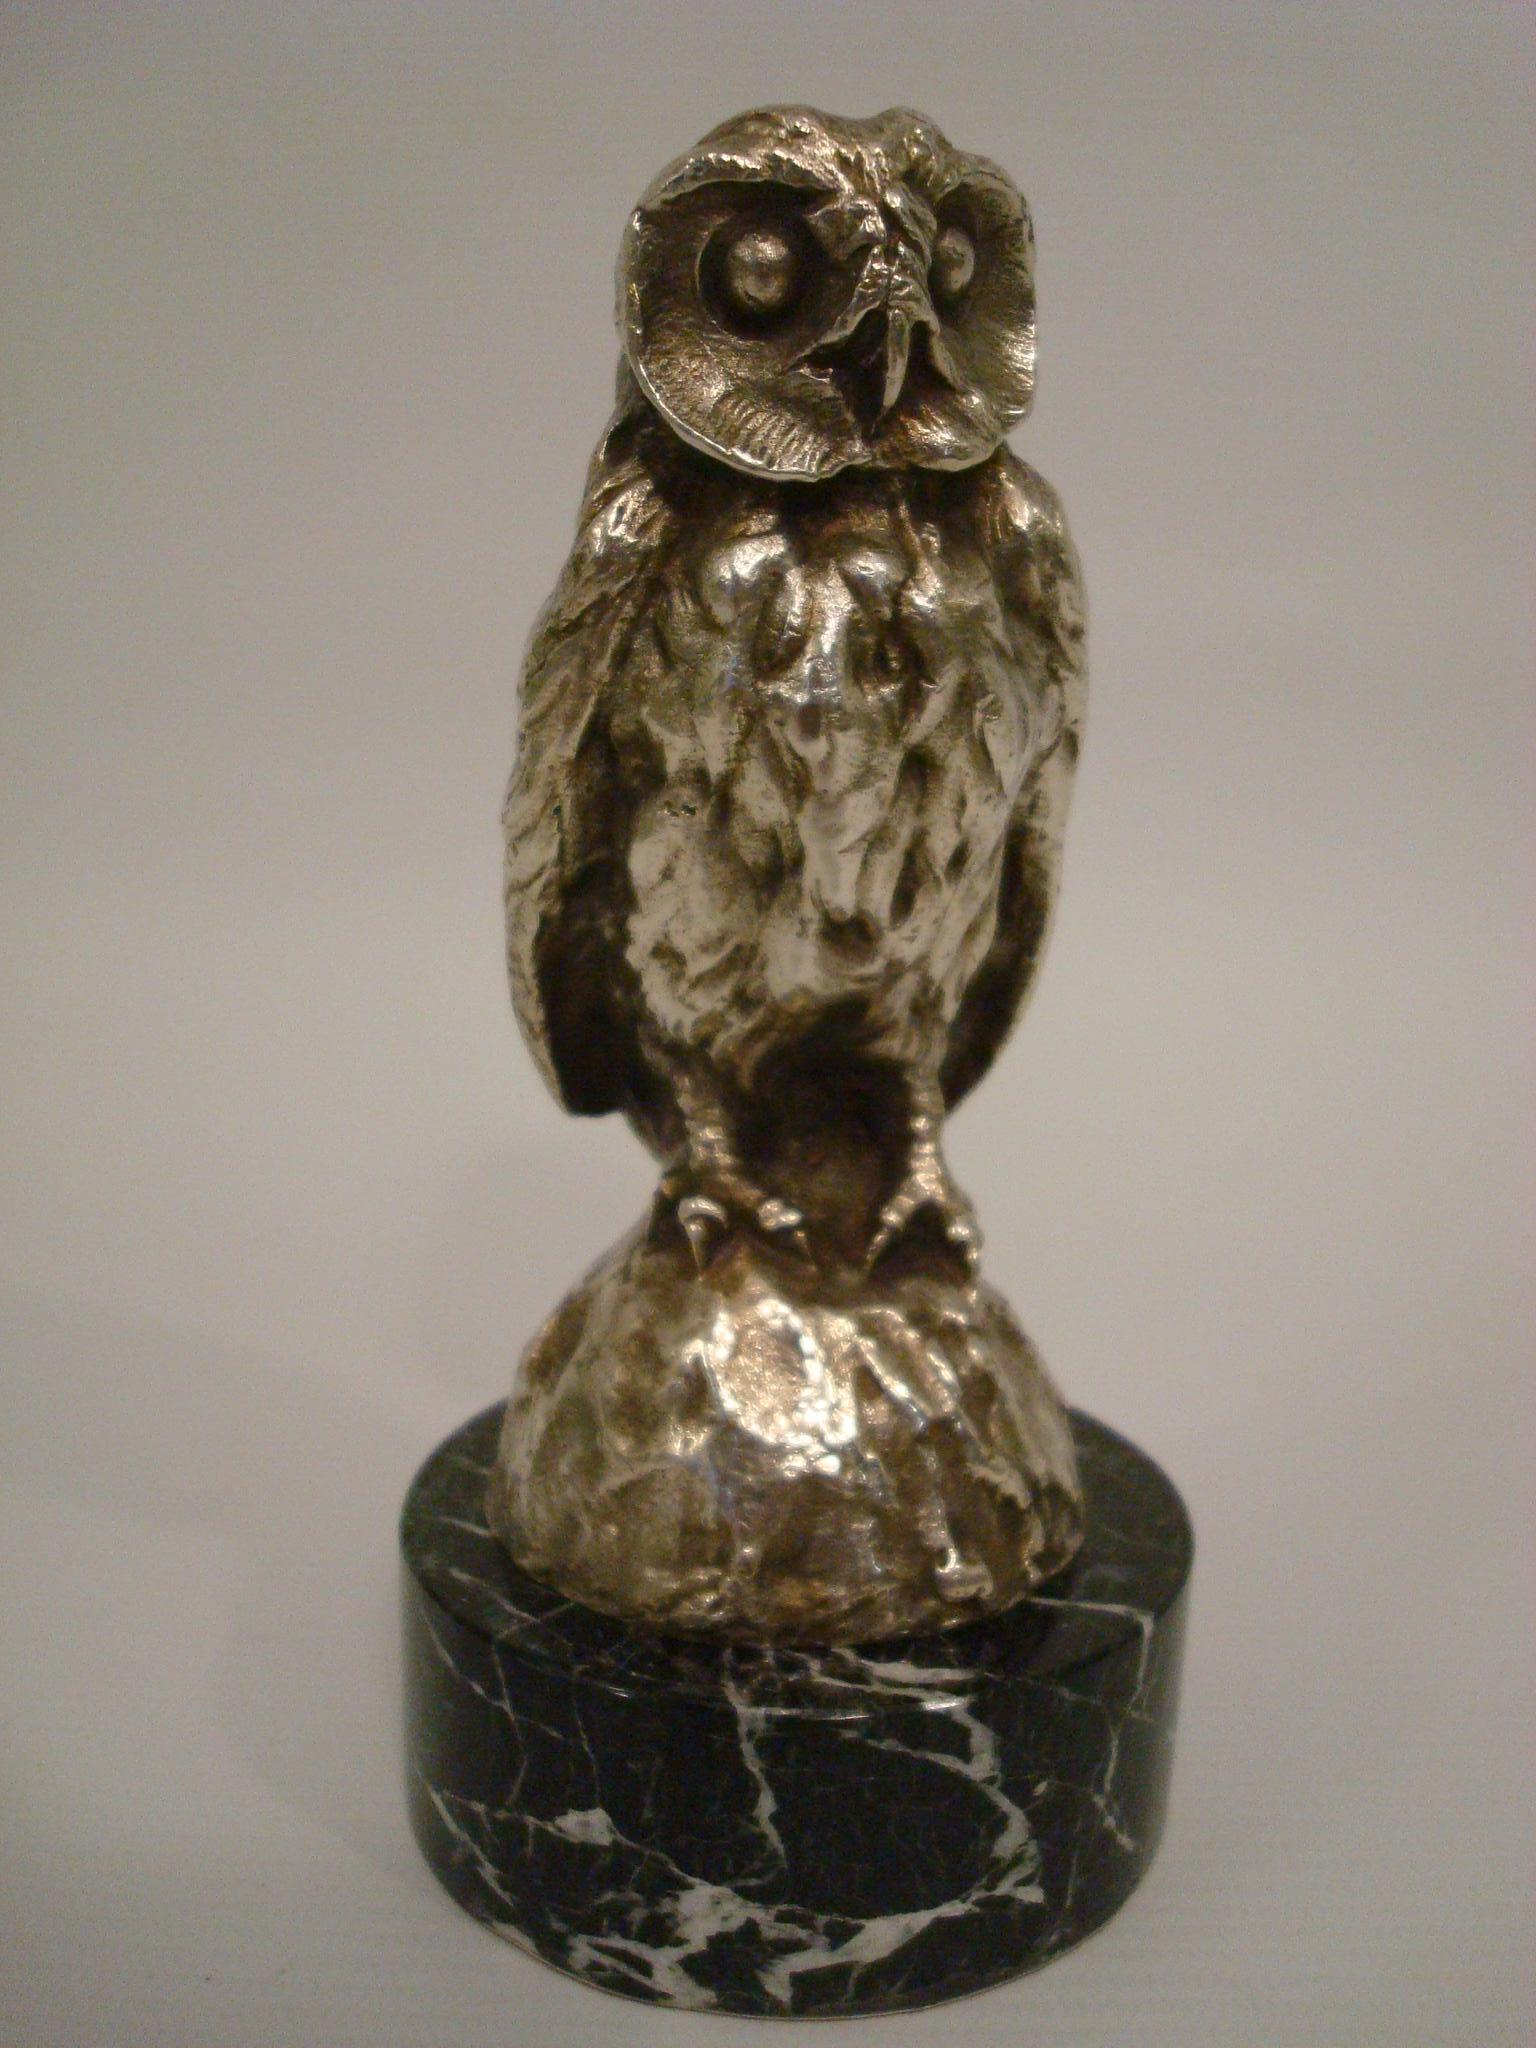 Bofill silvered bronze owl - Hibou Desk Paperweight / Car Mascot / Hood Ornament. France 1910-15.
Silver plated bronze, signed. Excellent original conditions.

HIBOU
Par Antoine Bofill (1875-1925)
Bronze argenté, signé, cachet MAM.